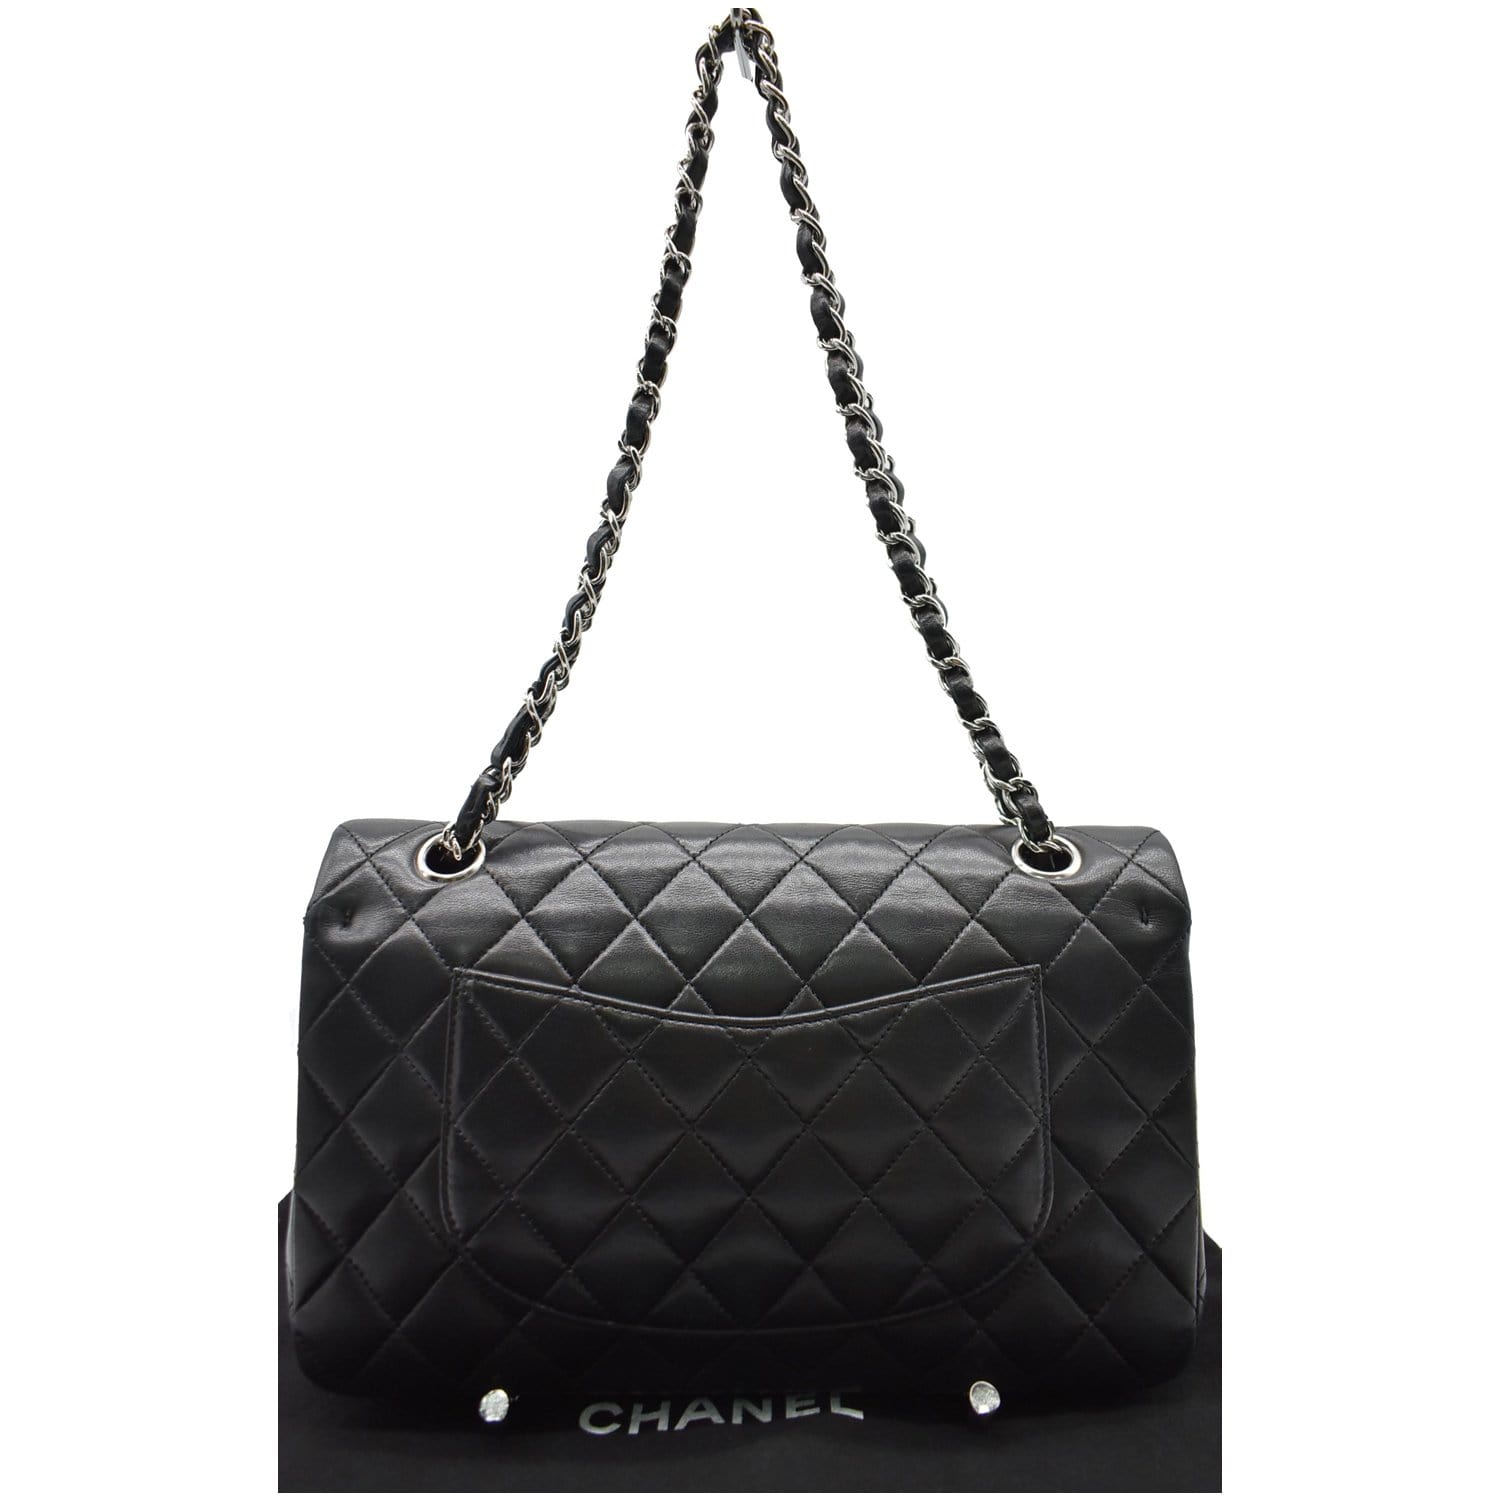 Chanel medium bijoux double - Gem